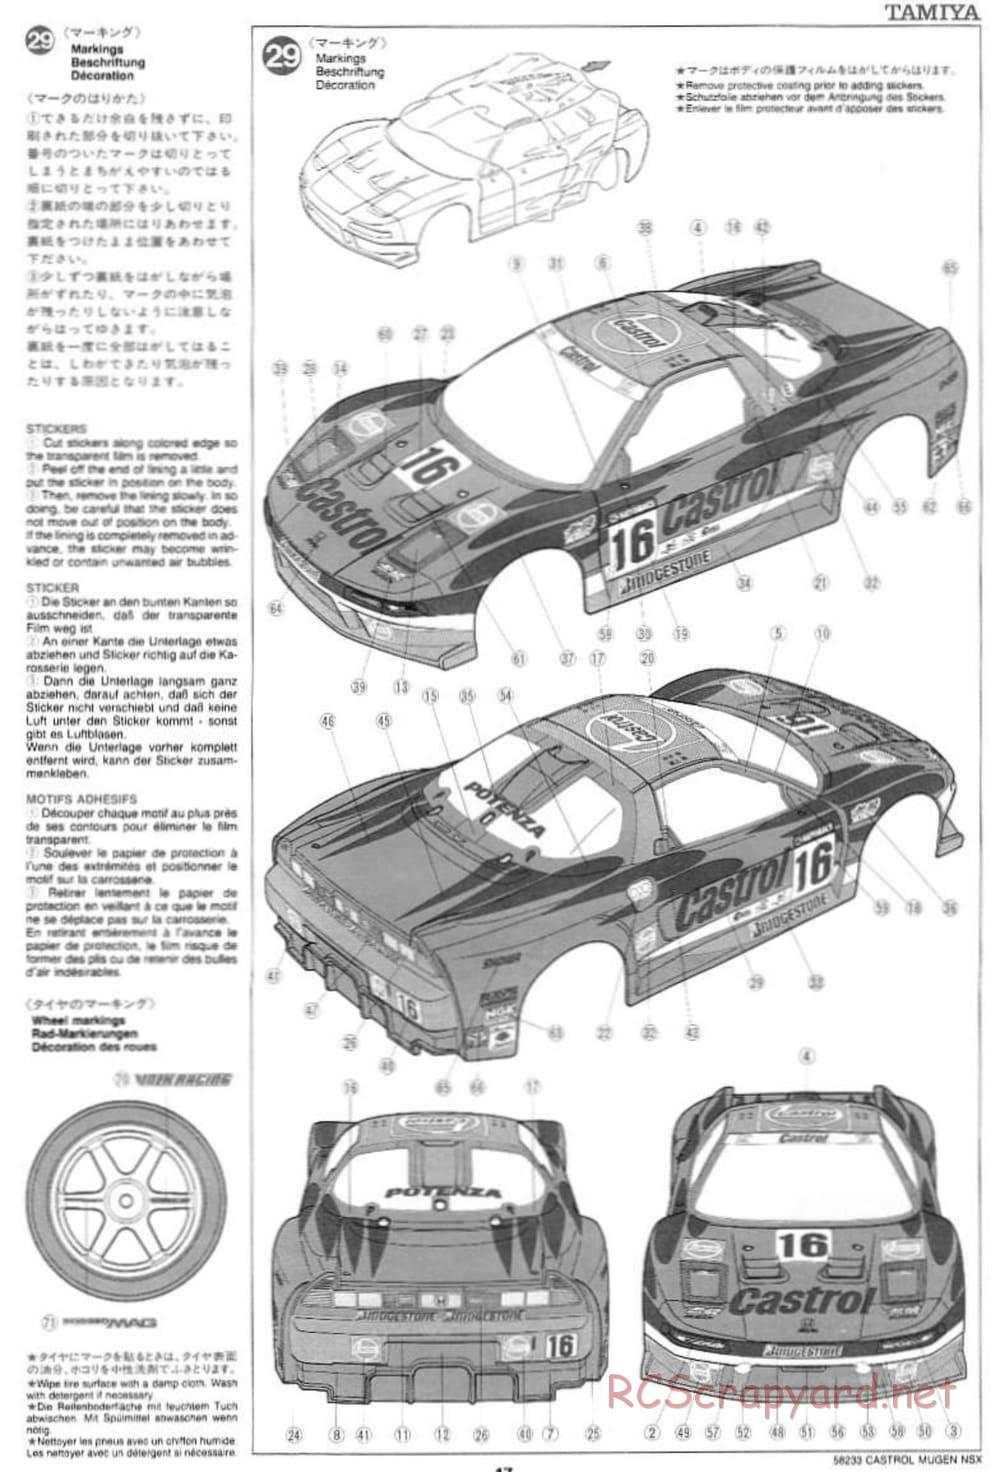 Tamiya - Castrol Mugen NSX - TL-01 Chassis - Manual - Page 17